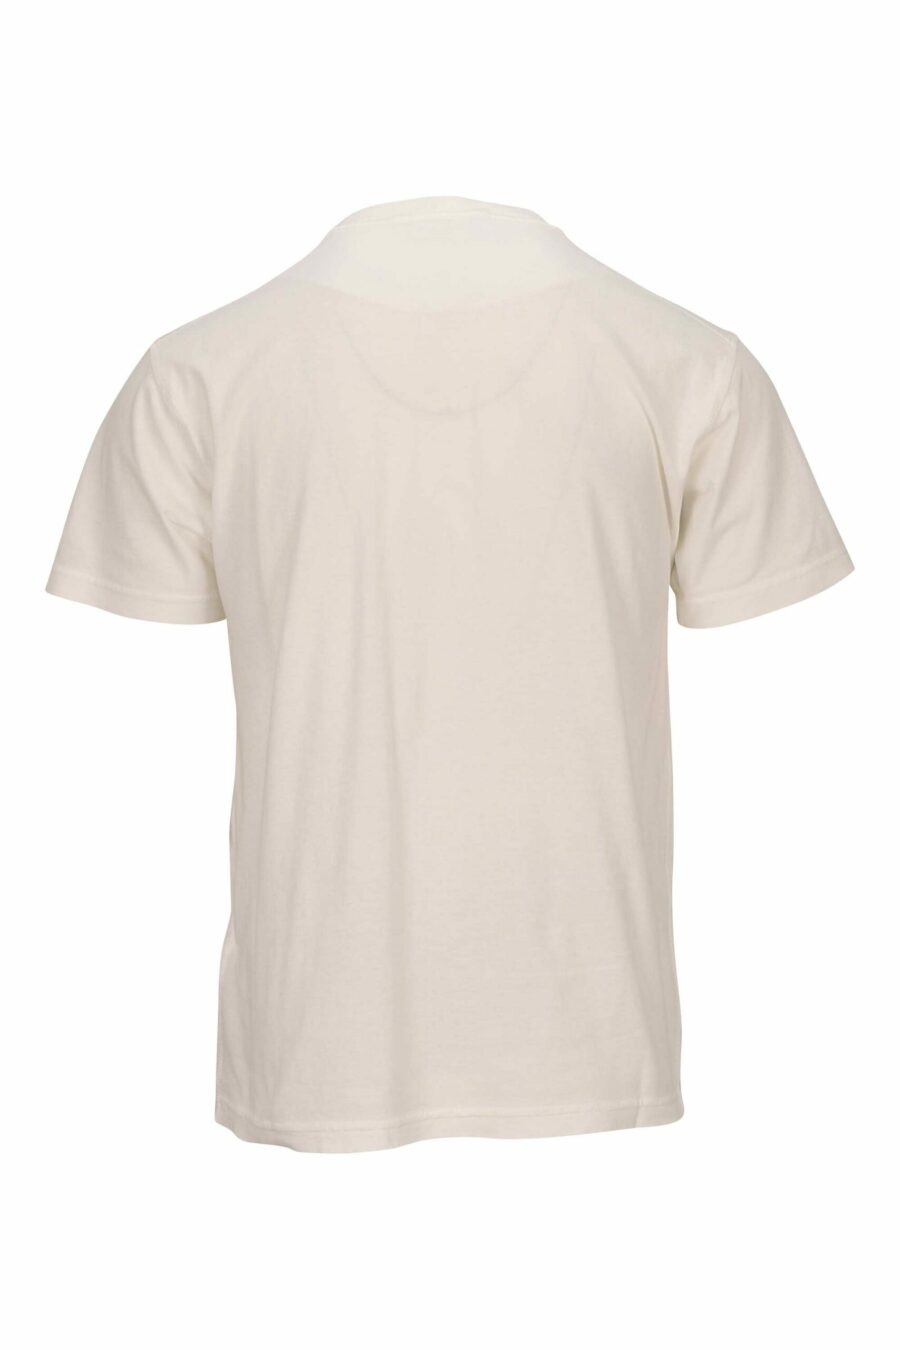 Camiseta blanca con minilogo brújula - 8052572902222 1 scaled